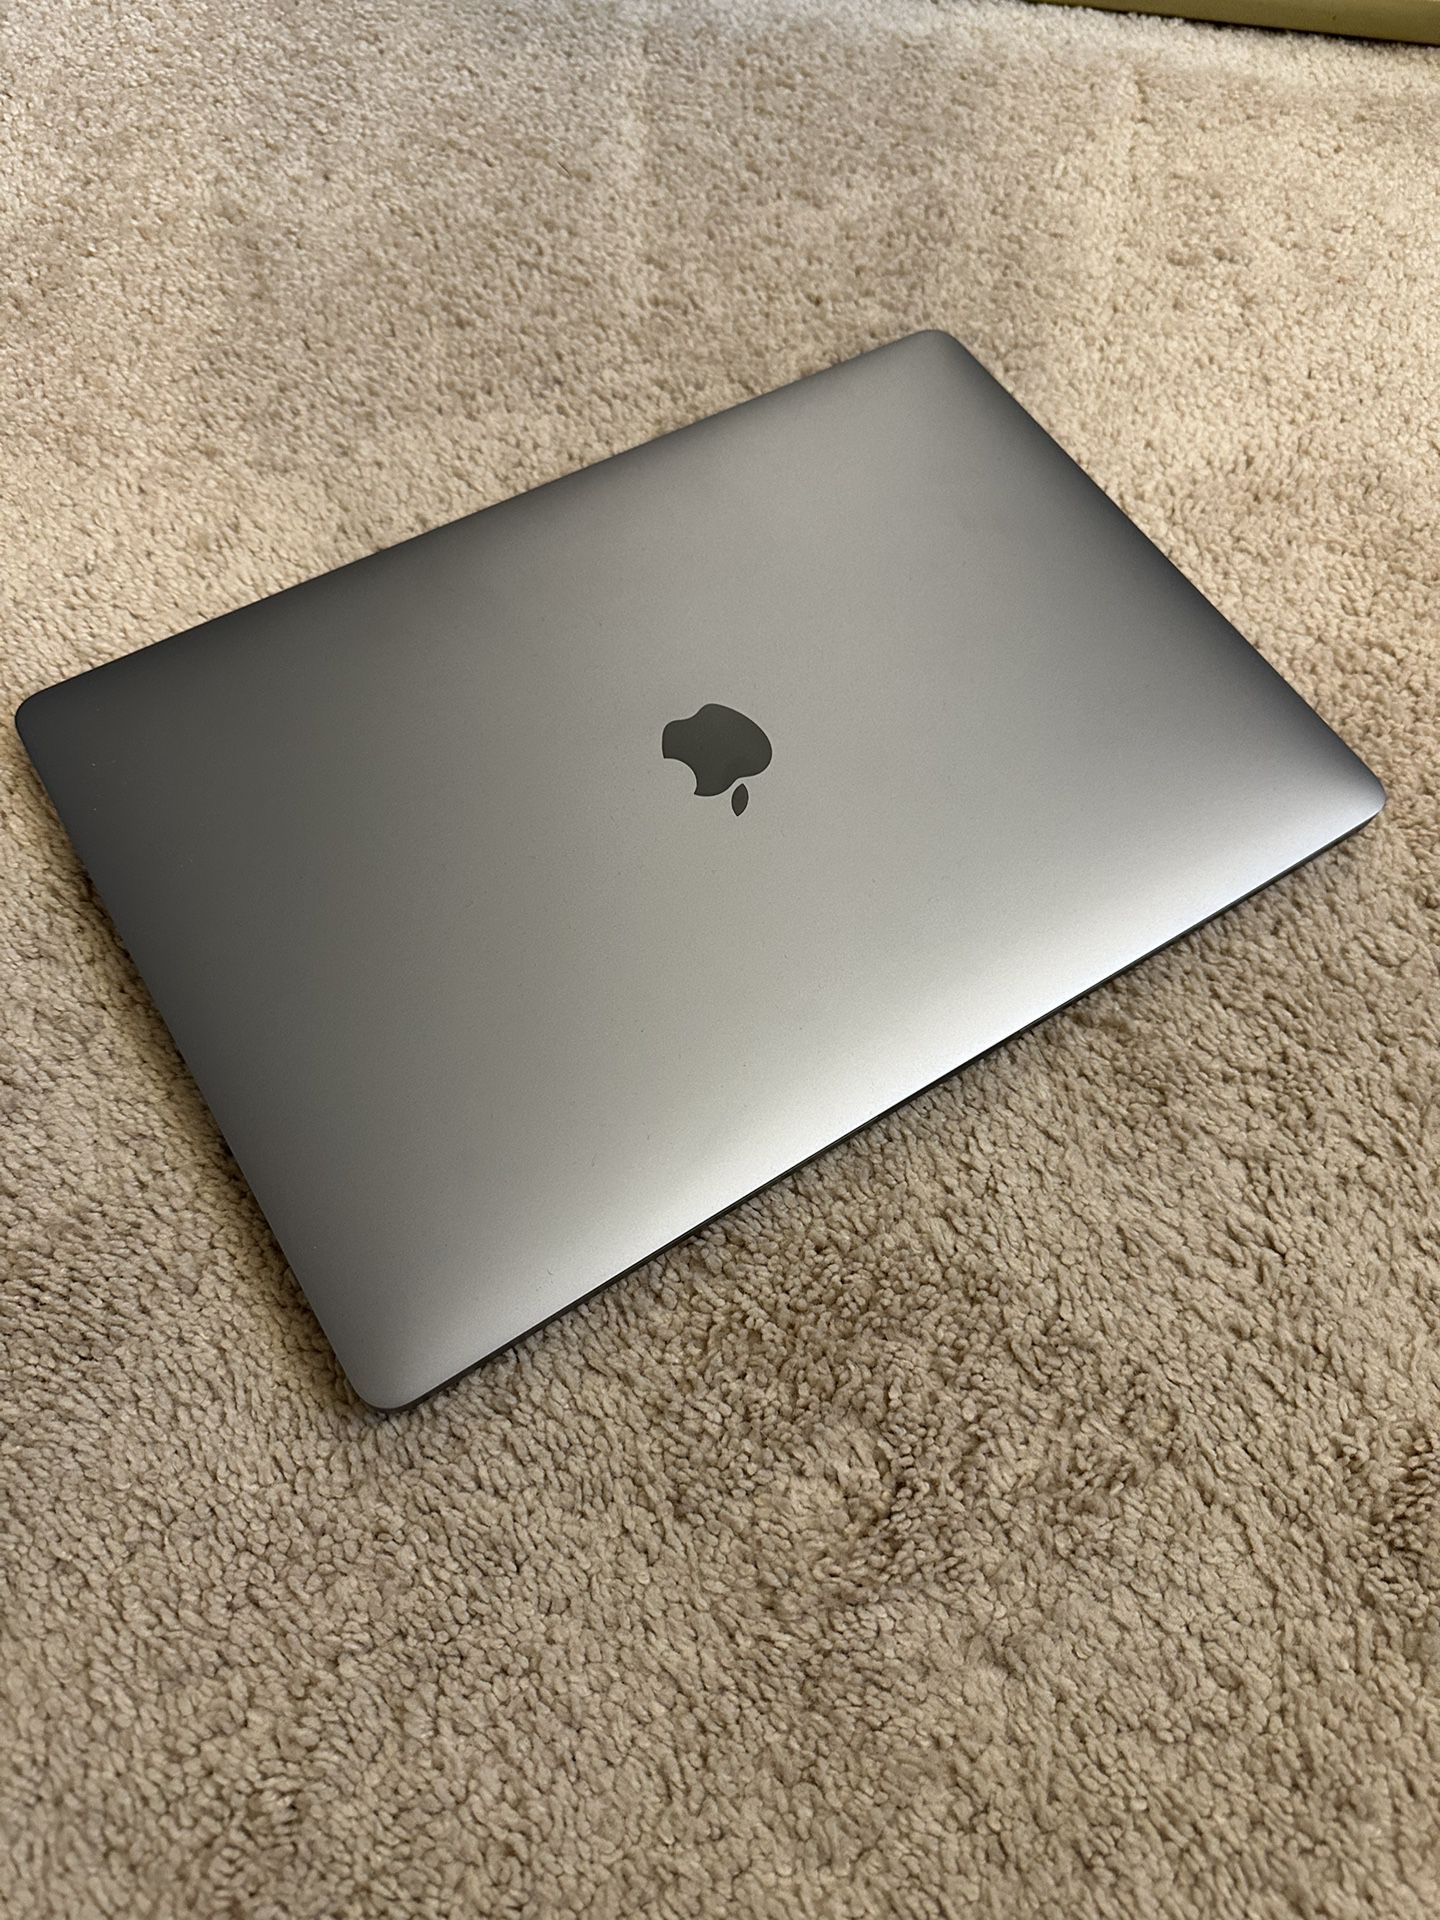 2016 15 Inch MacBook Pro i7